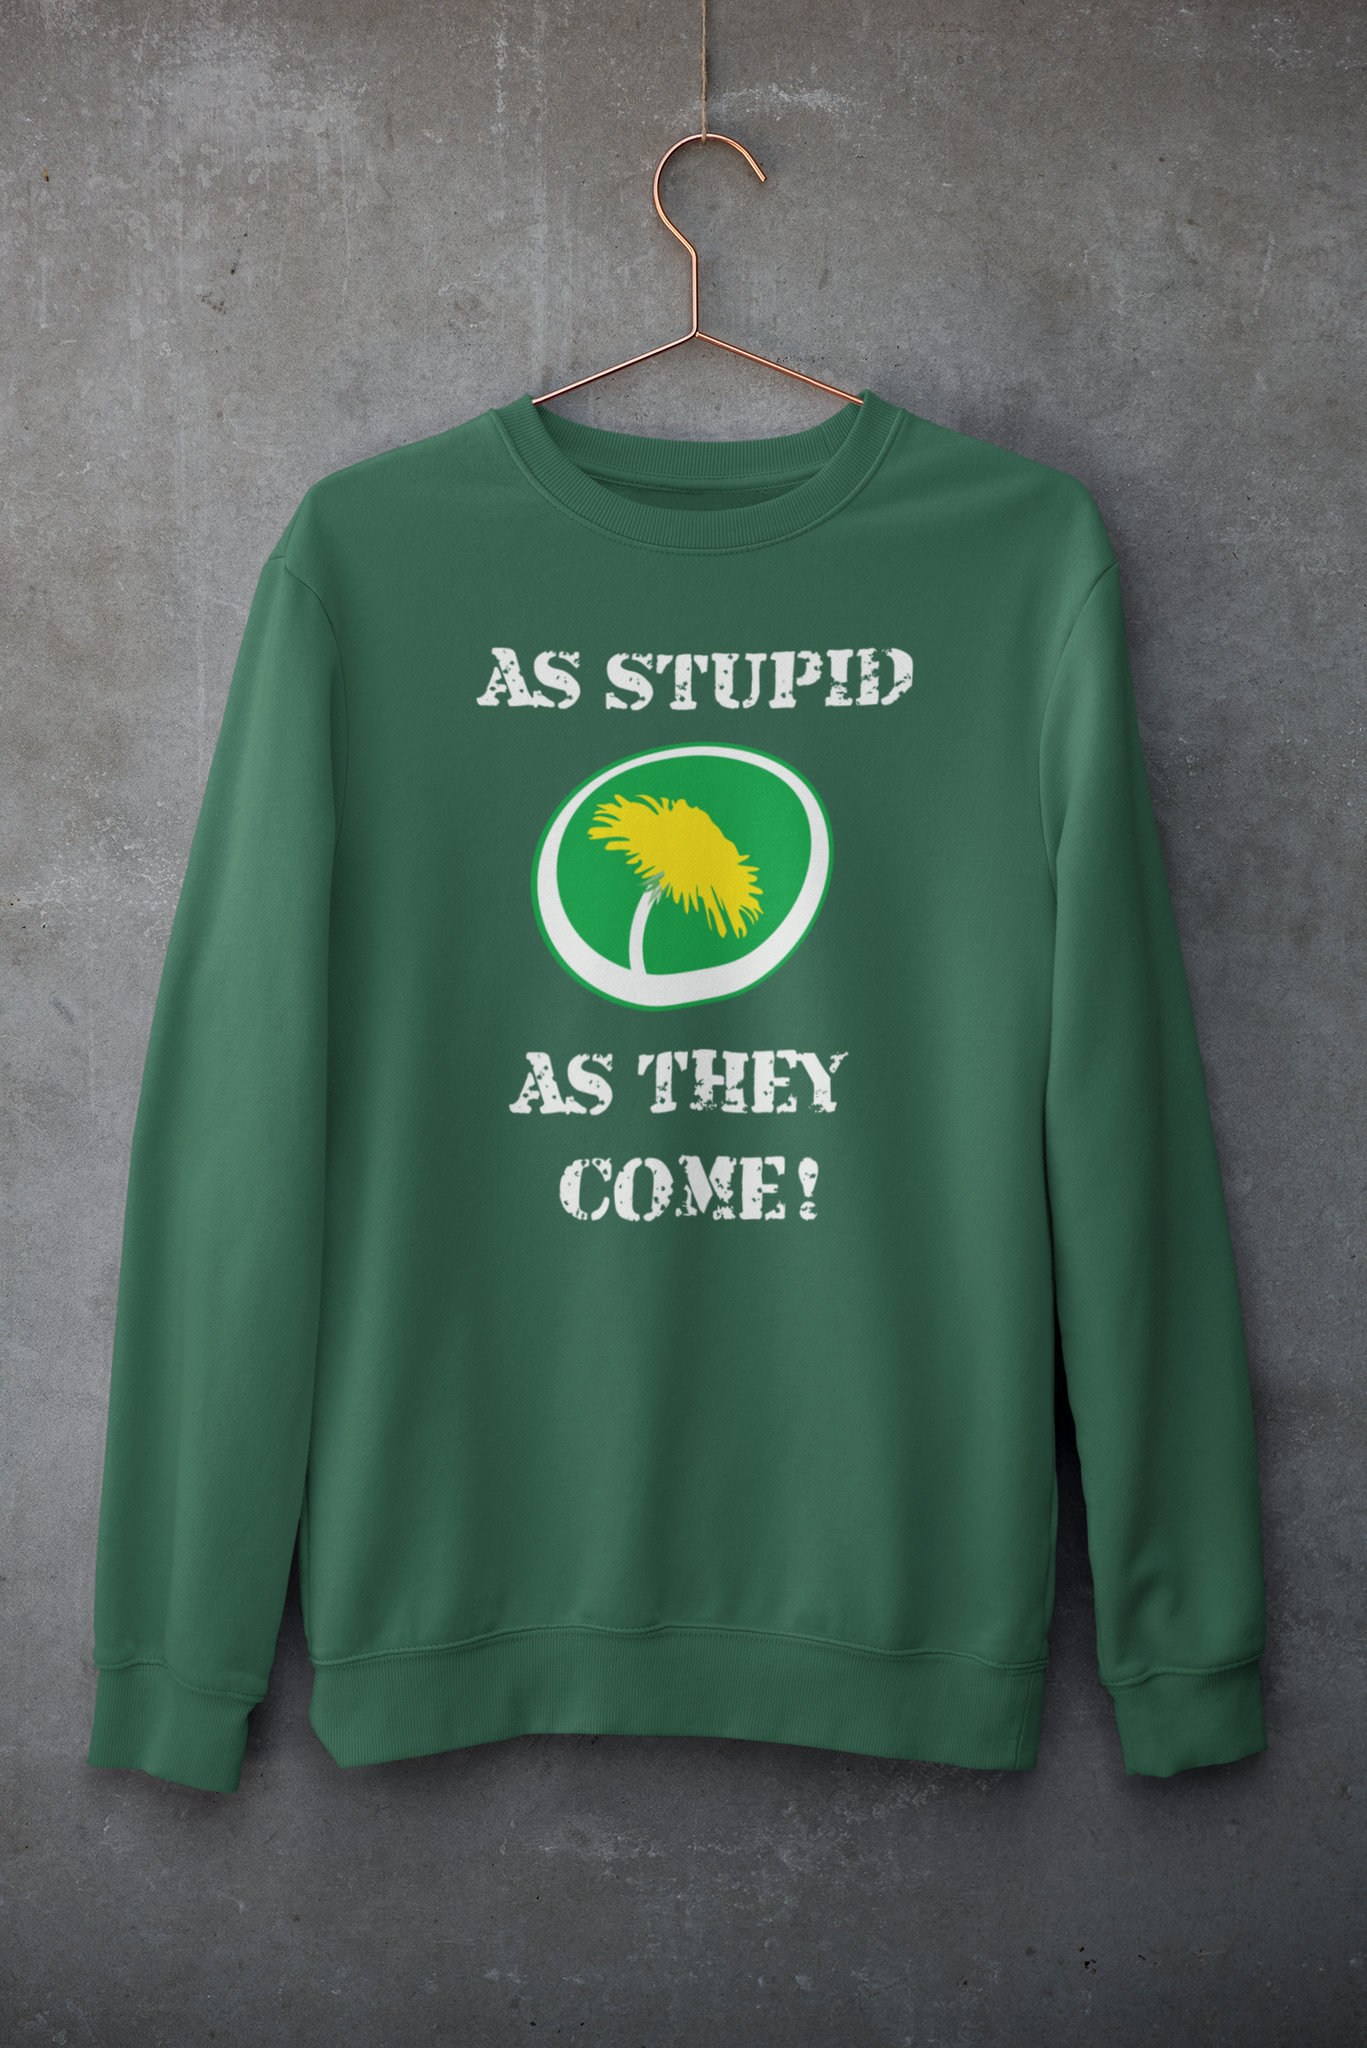 Miljöpartiet As Stupid As They Come! Sweatshirt Unisex